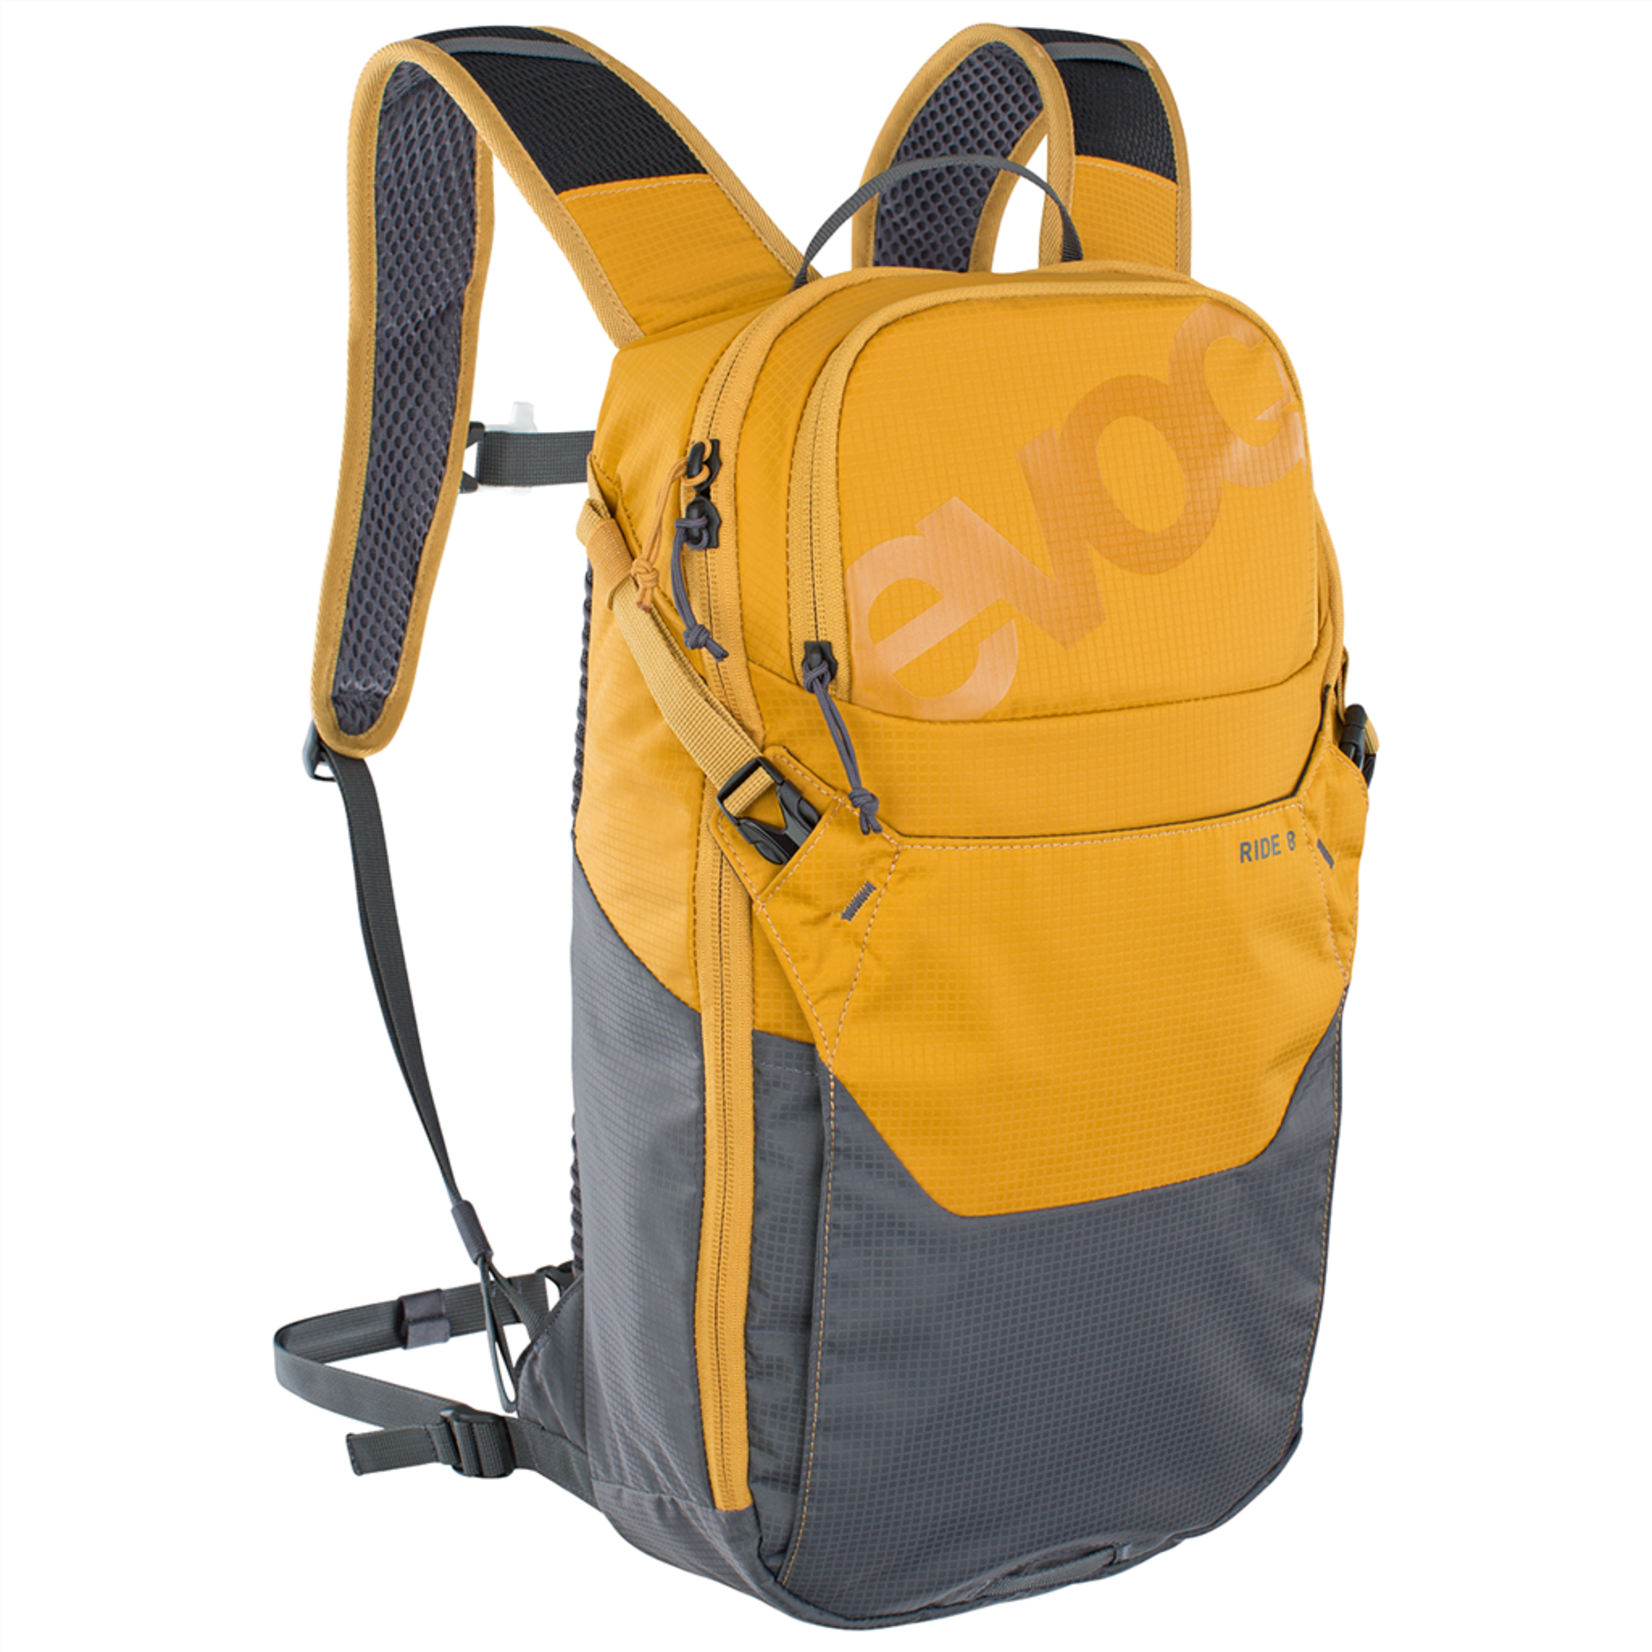 EVOC EVOC - Ride 8L Backpack - One size